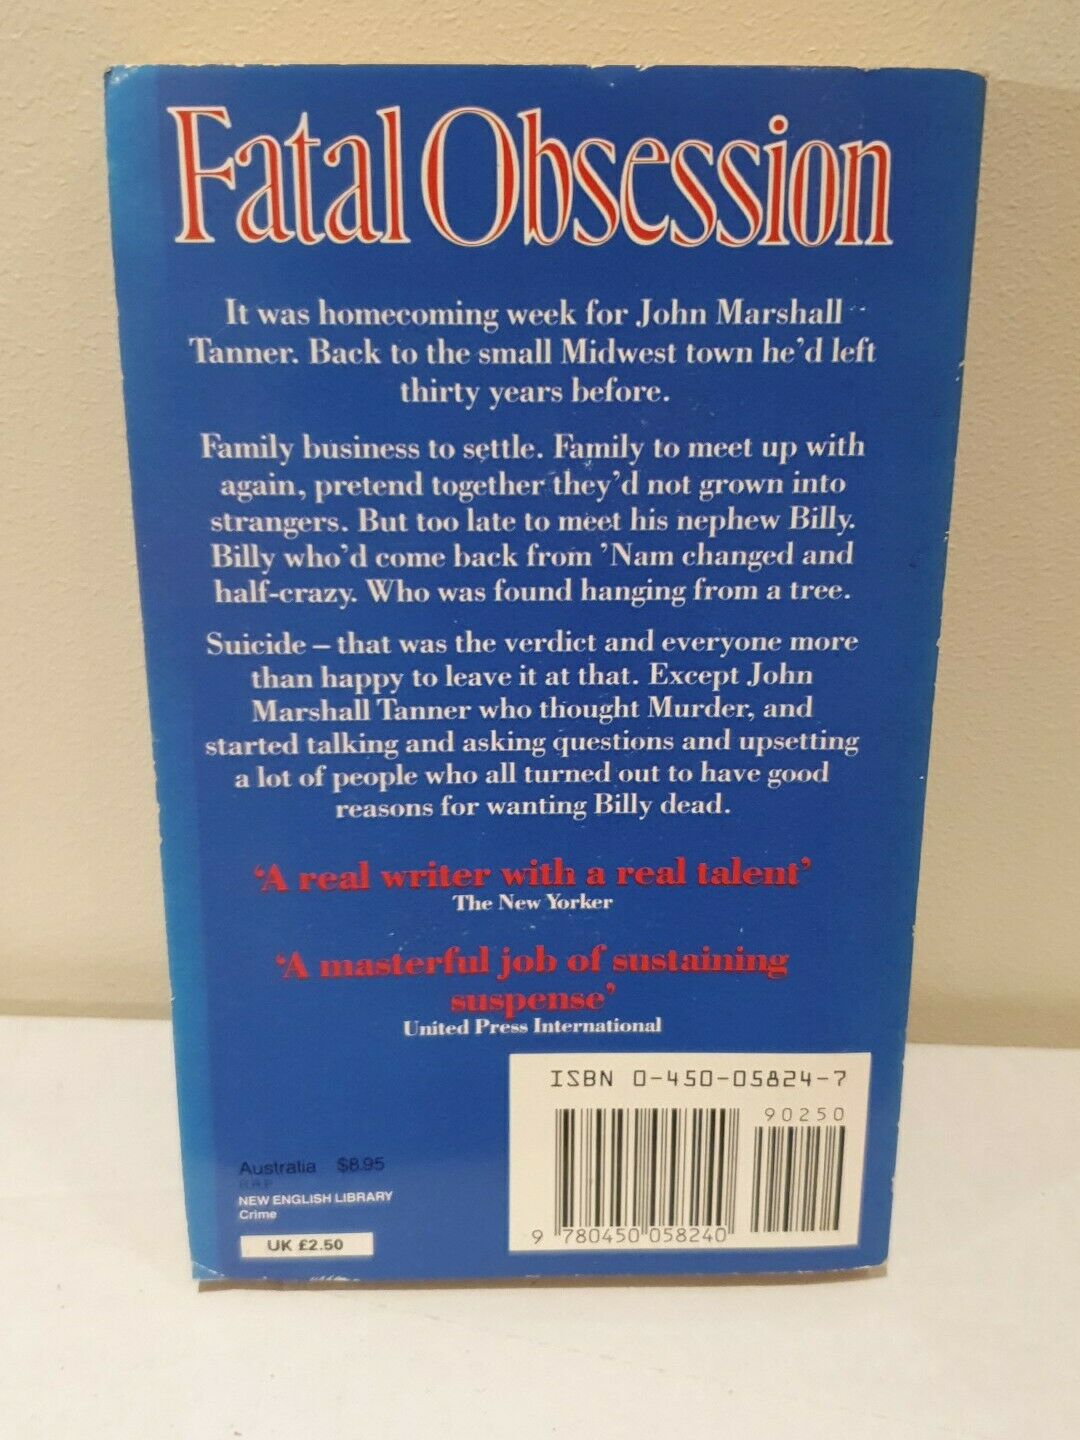 Fatal Obsession by Stephen Greenleaf (1987)